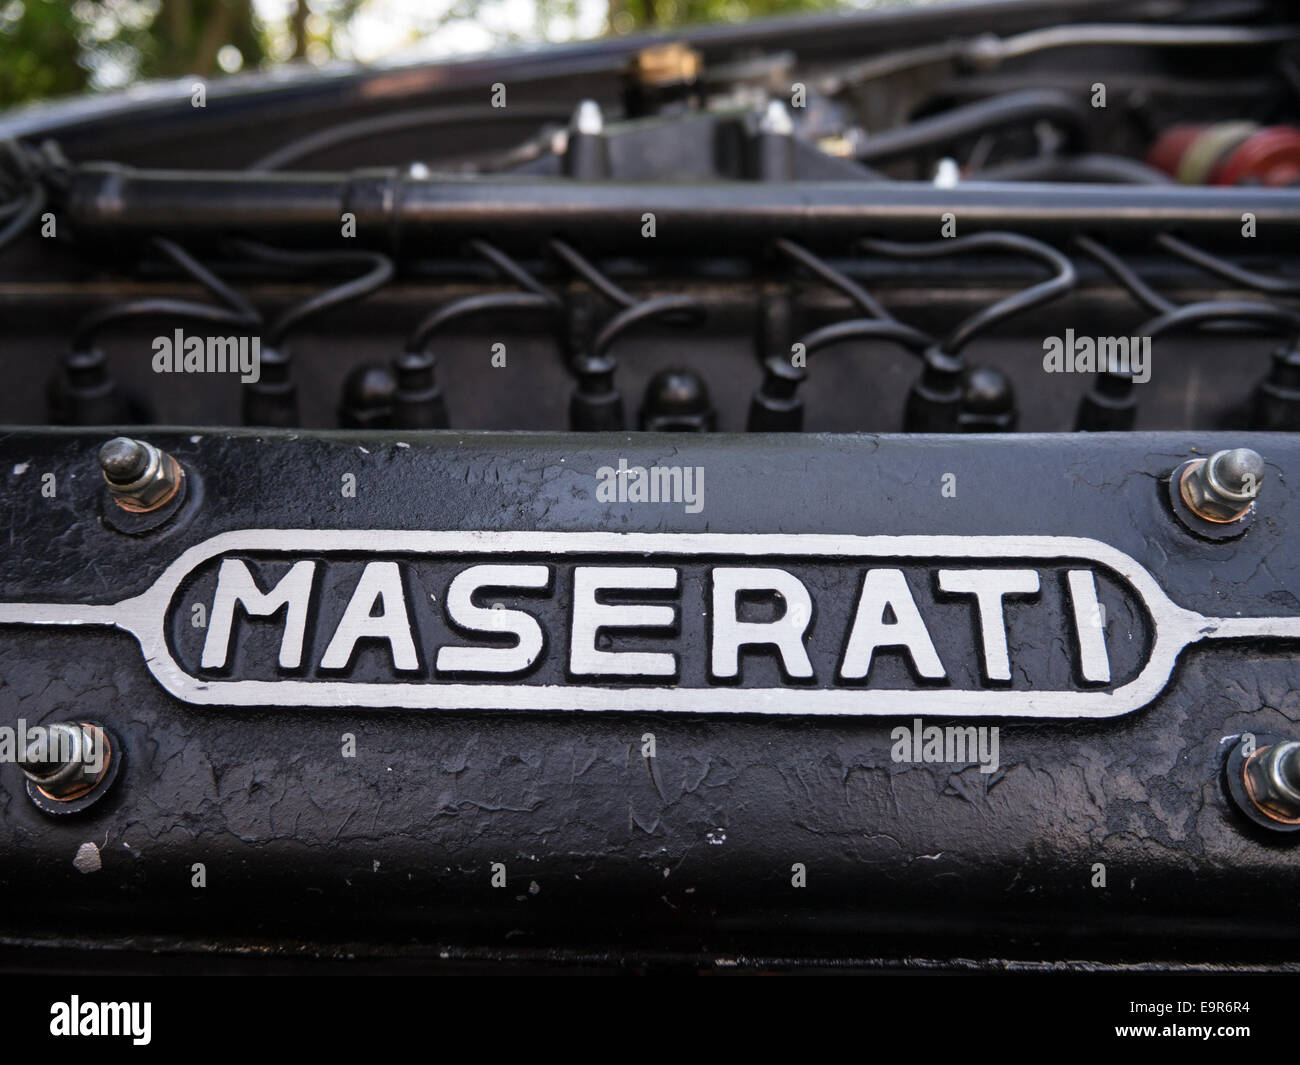 A classic Maserati racing car engine with prominent maserati logo Stock Photo